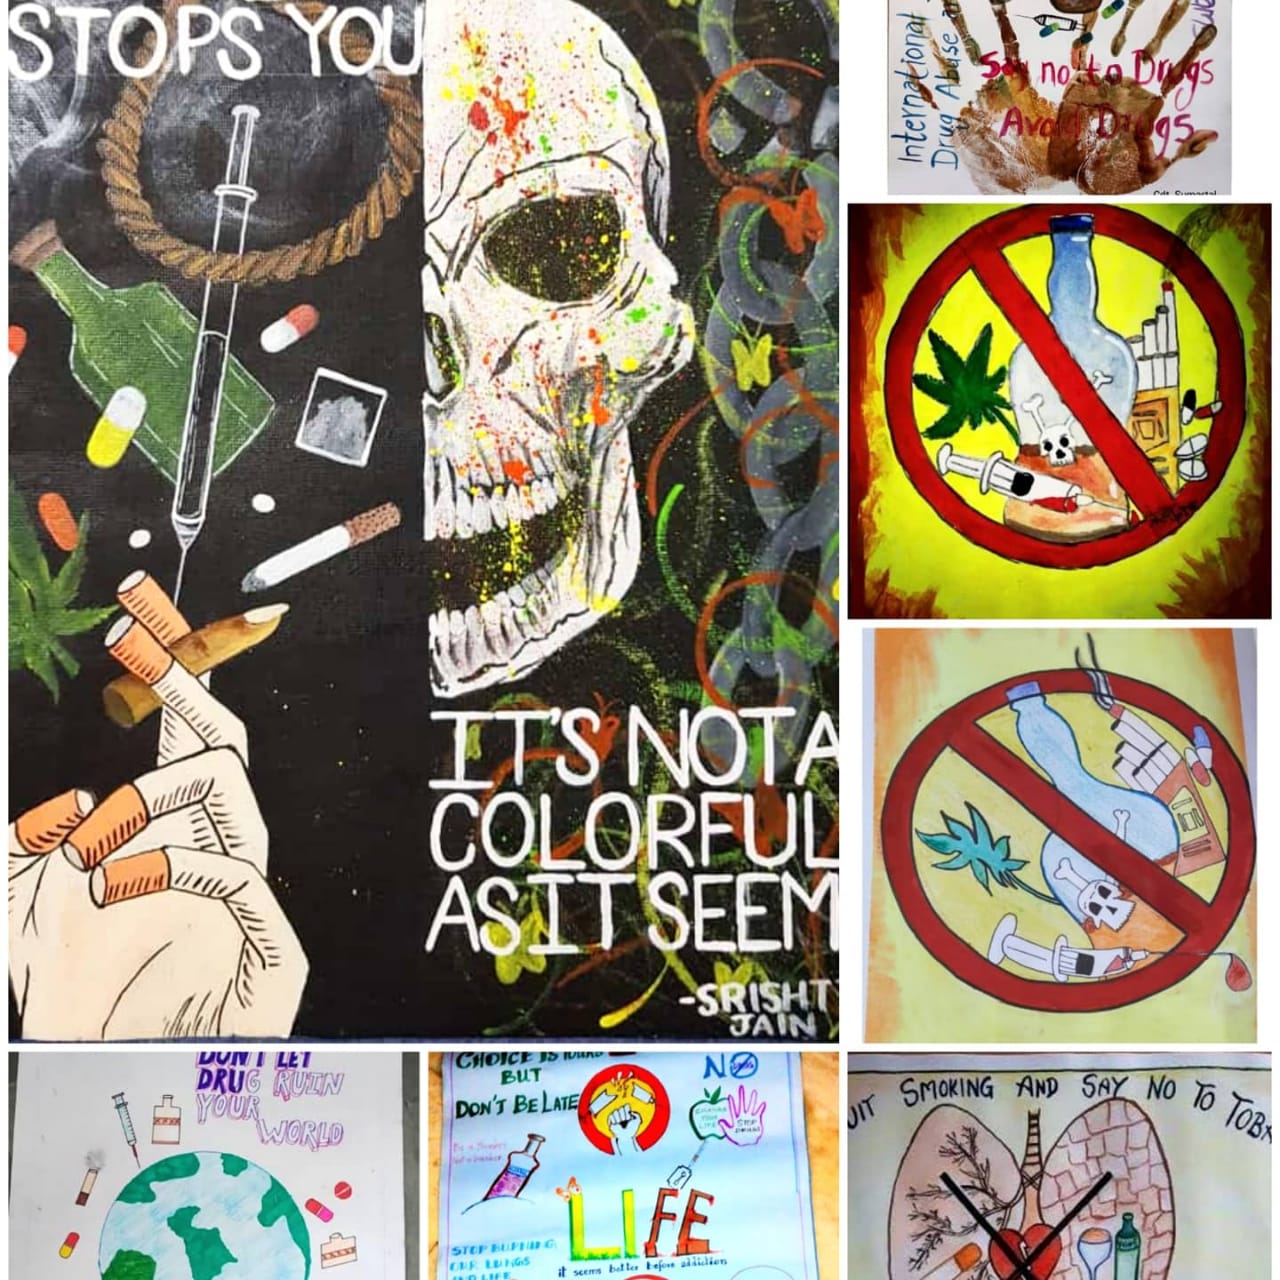 Drugs Kill - Skull And Crossbones - Posters and Art Prints | TeePublic